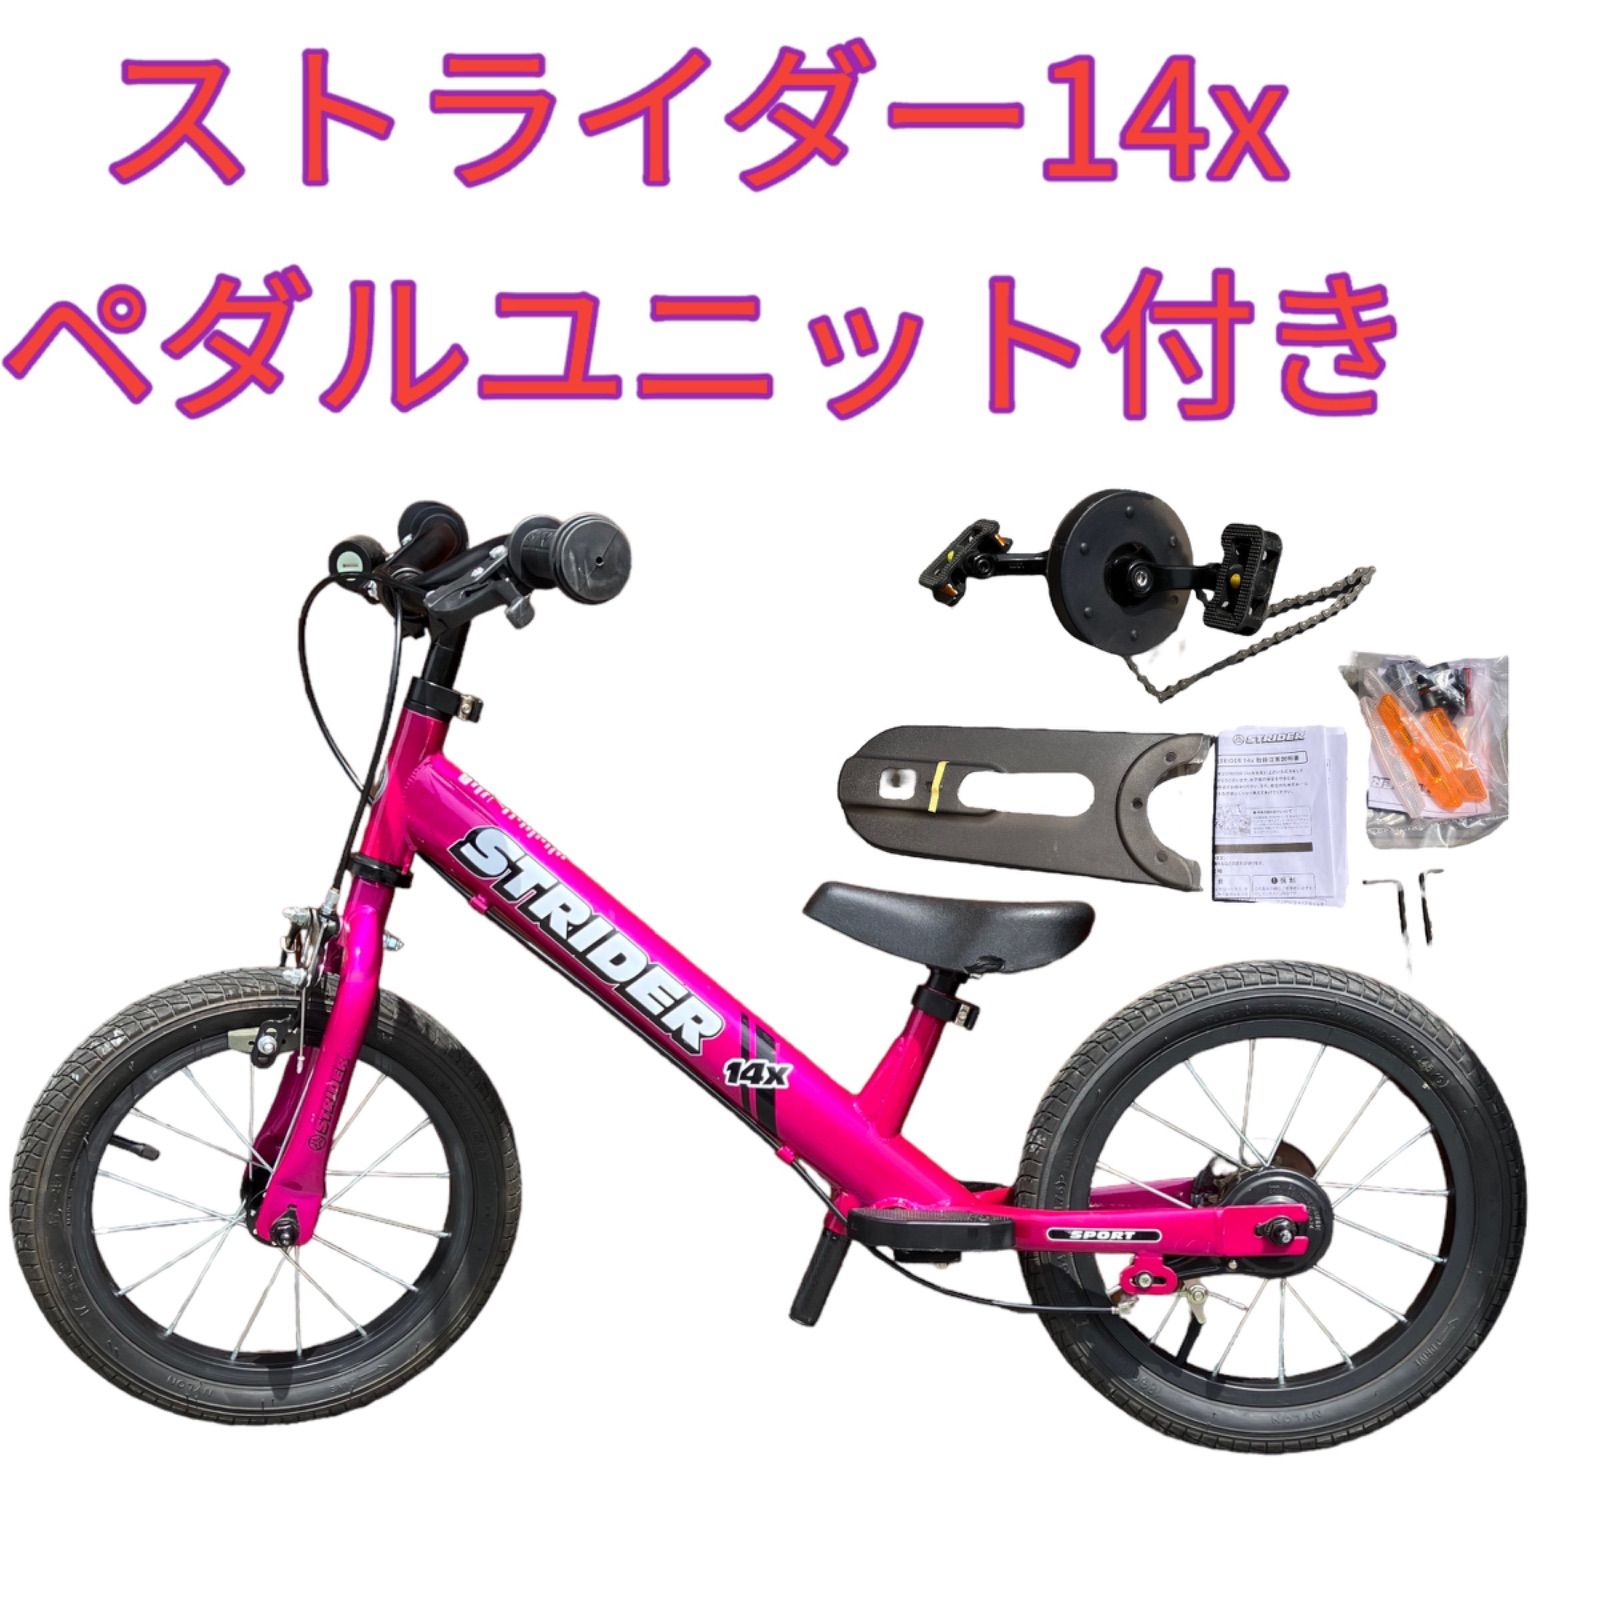 STRIDER 14X ピンク ペダルユニット・スタンド装着済 - 自転車本体